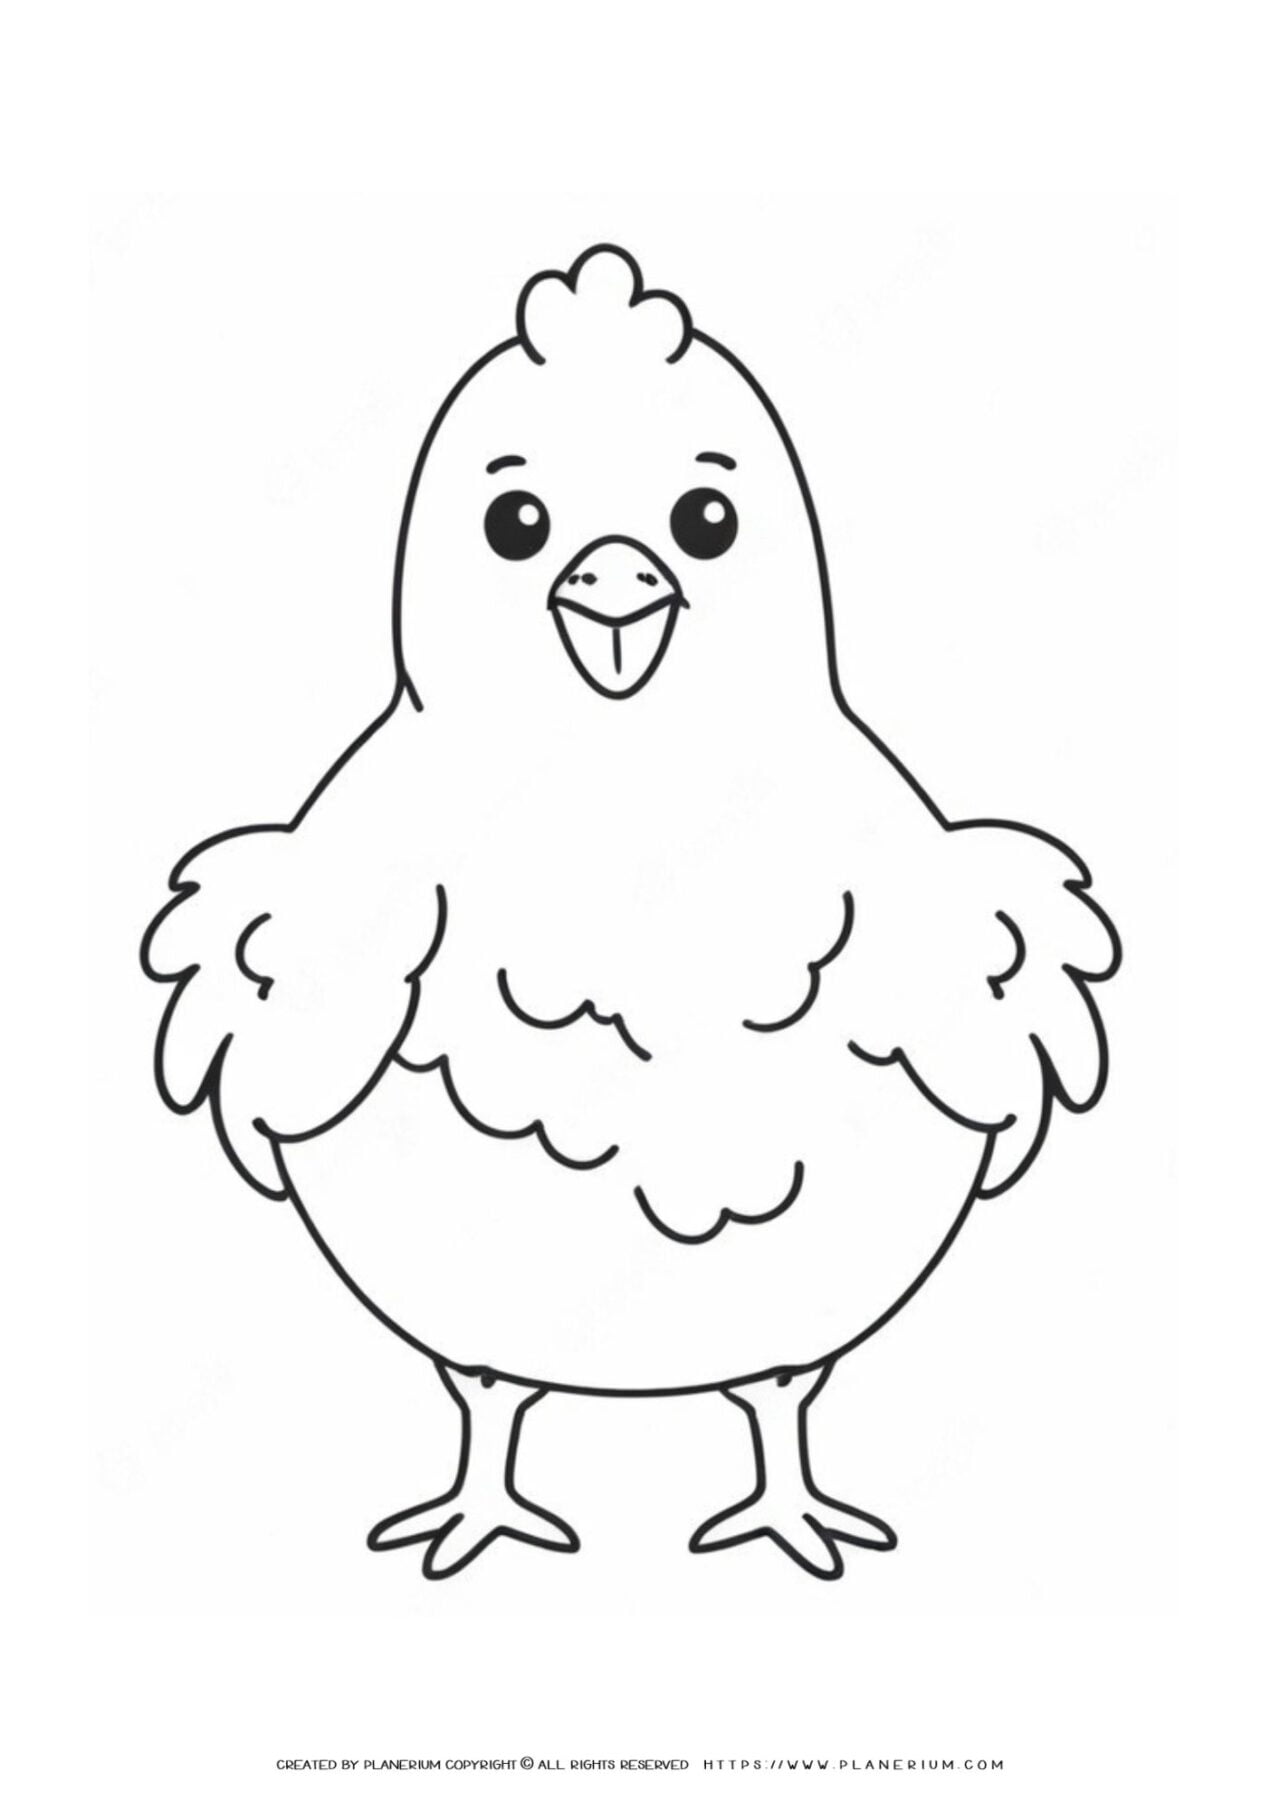 Cartoon chicken coloring page illustration.